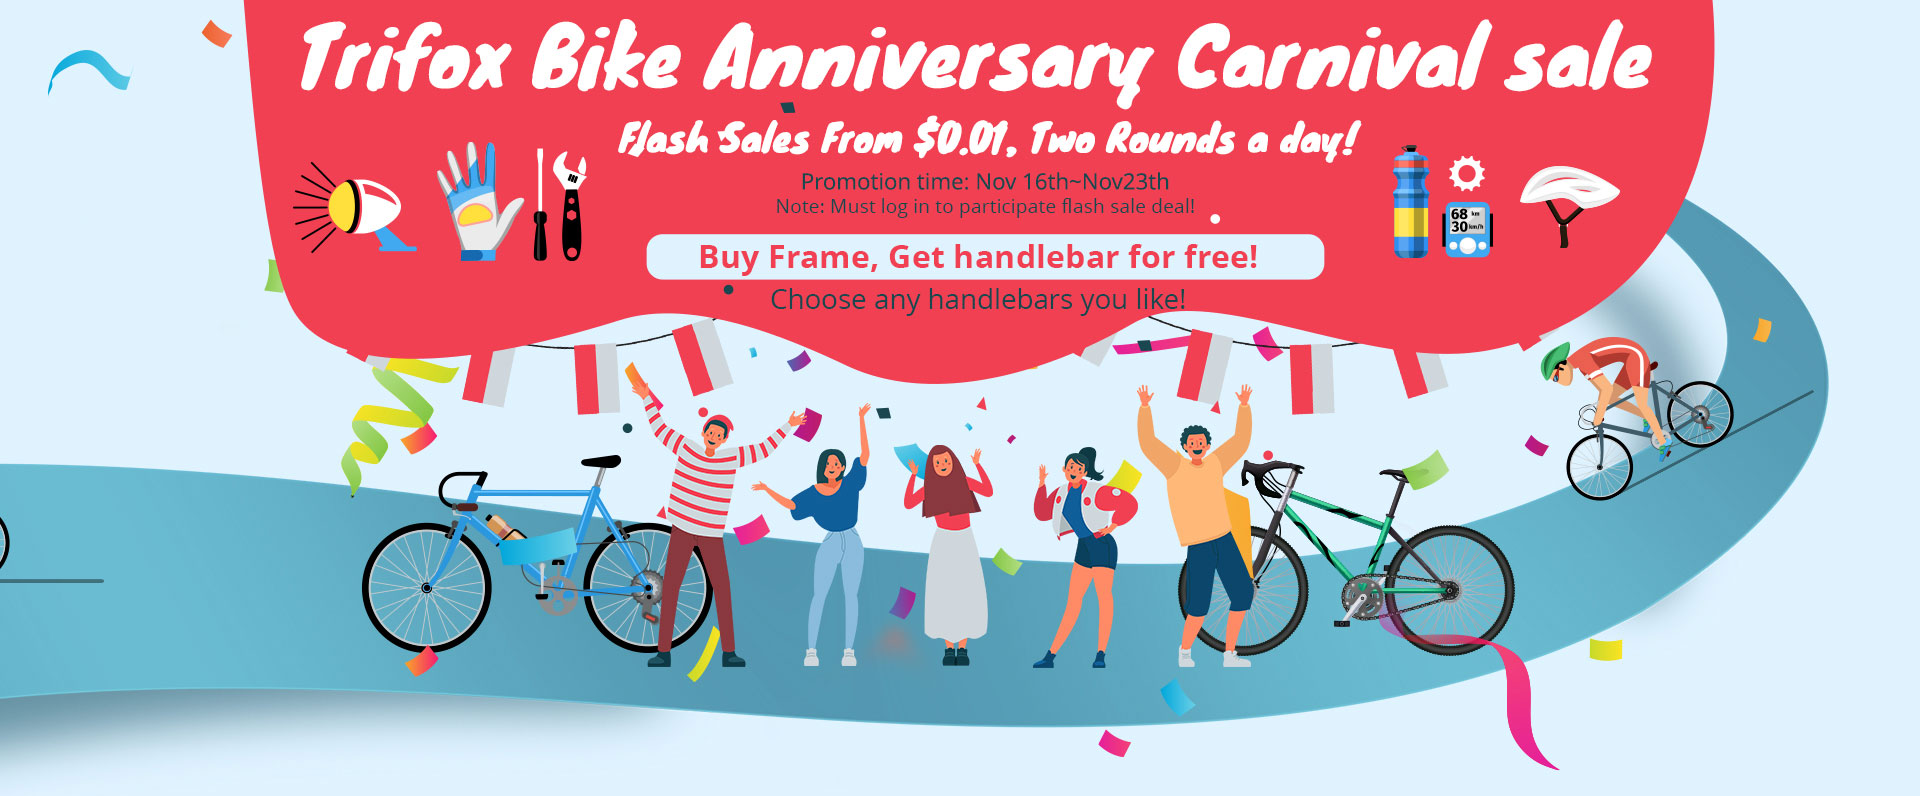 Trifox Bike 5th Anniversary Carnival Sale